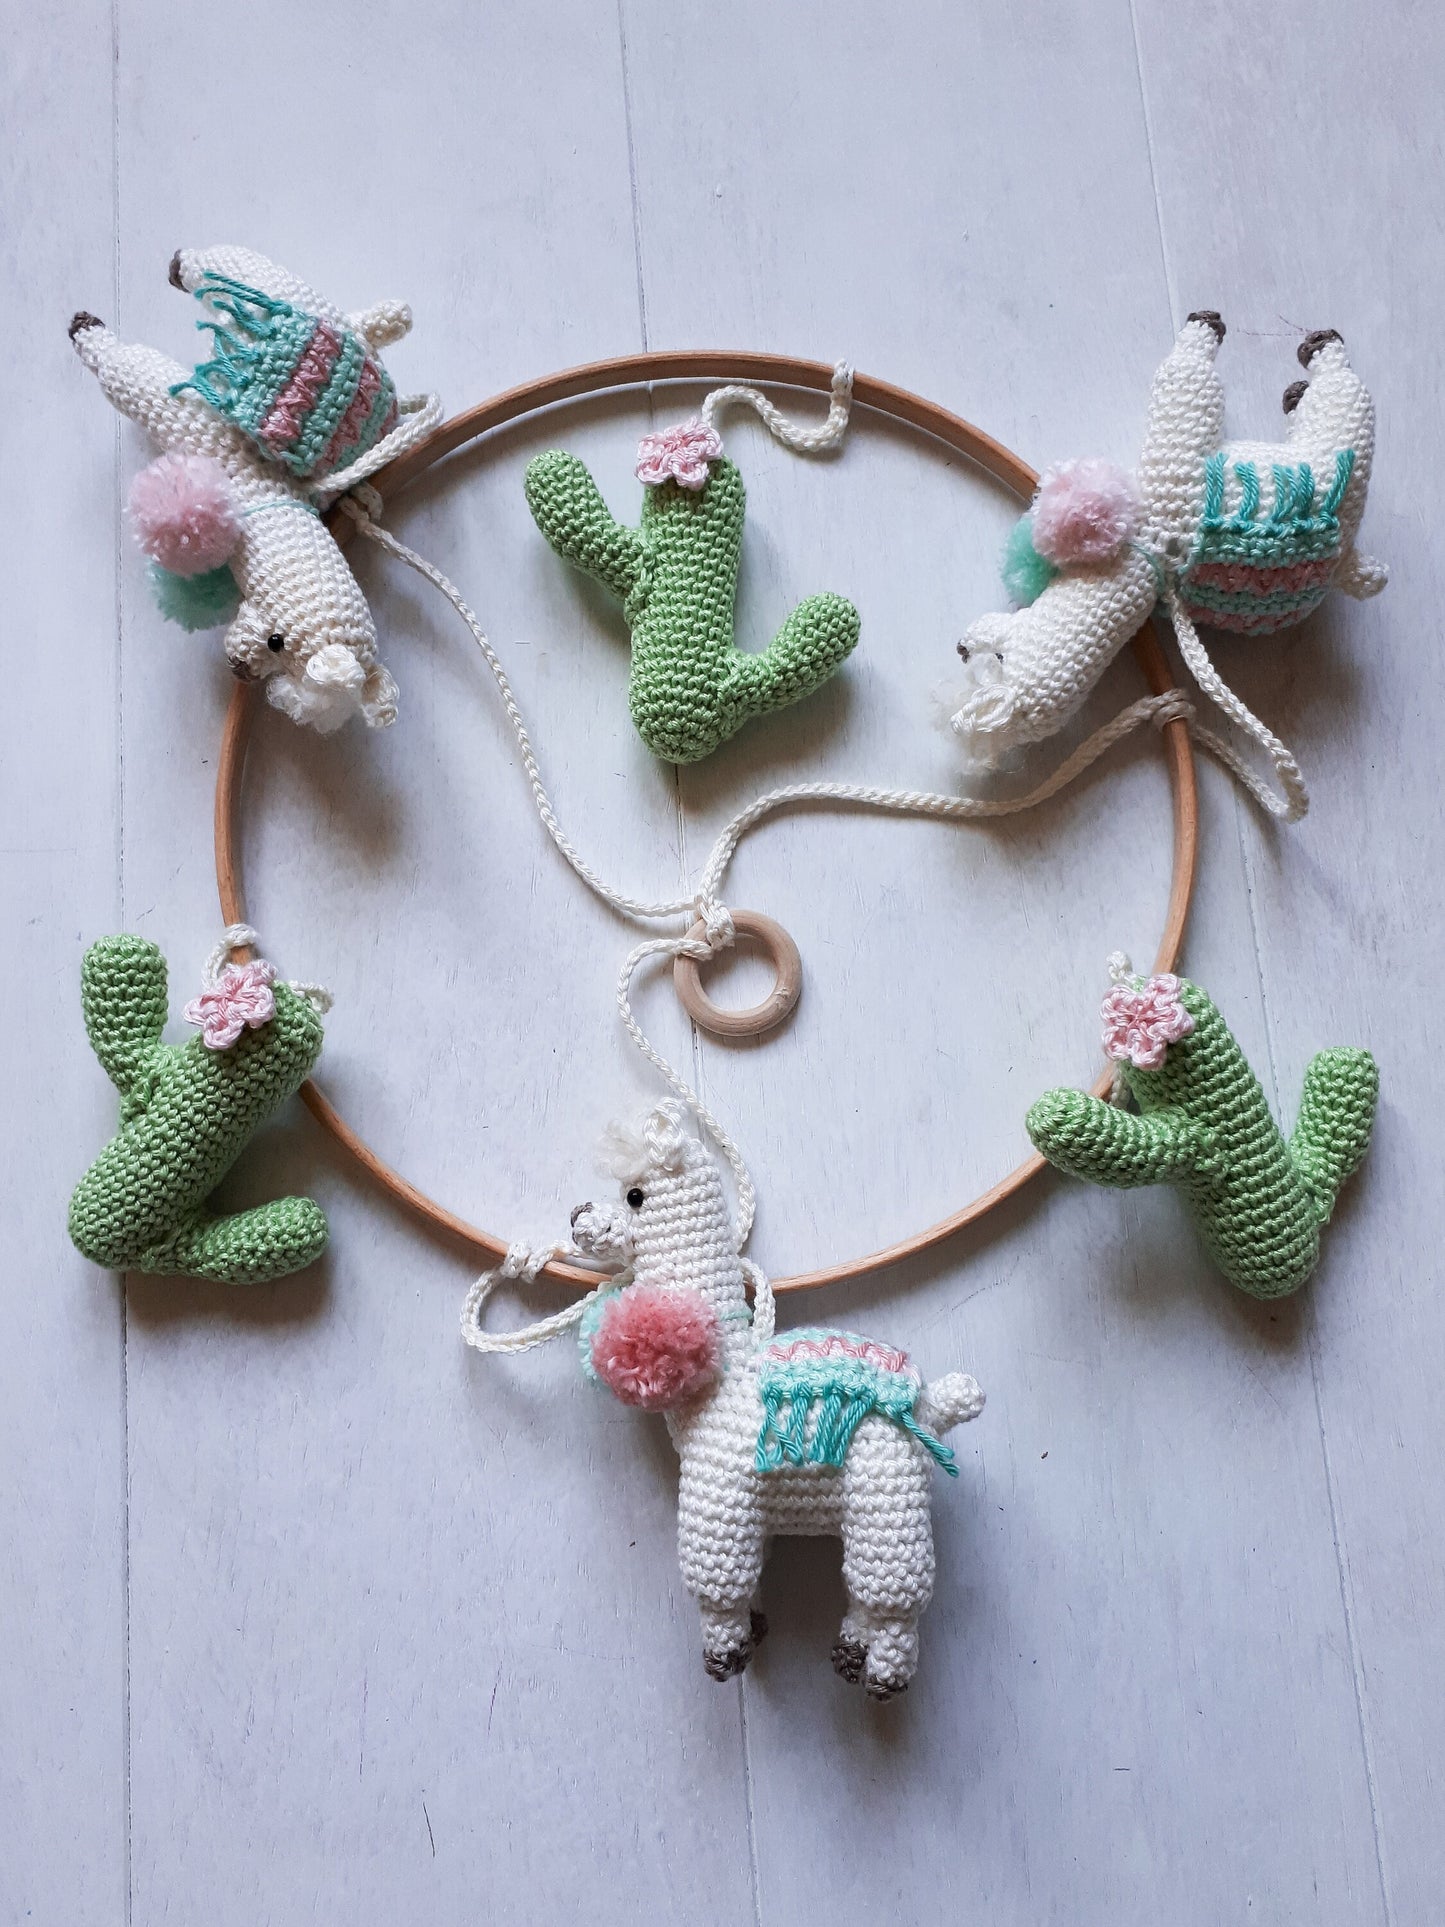 Llama baby mobile crochet pattern